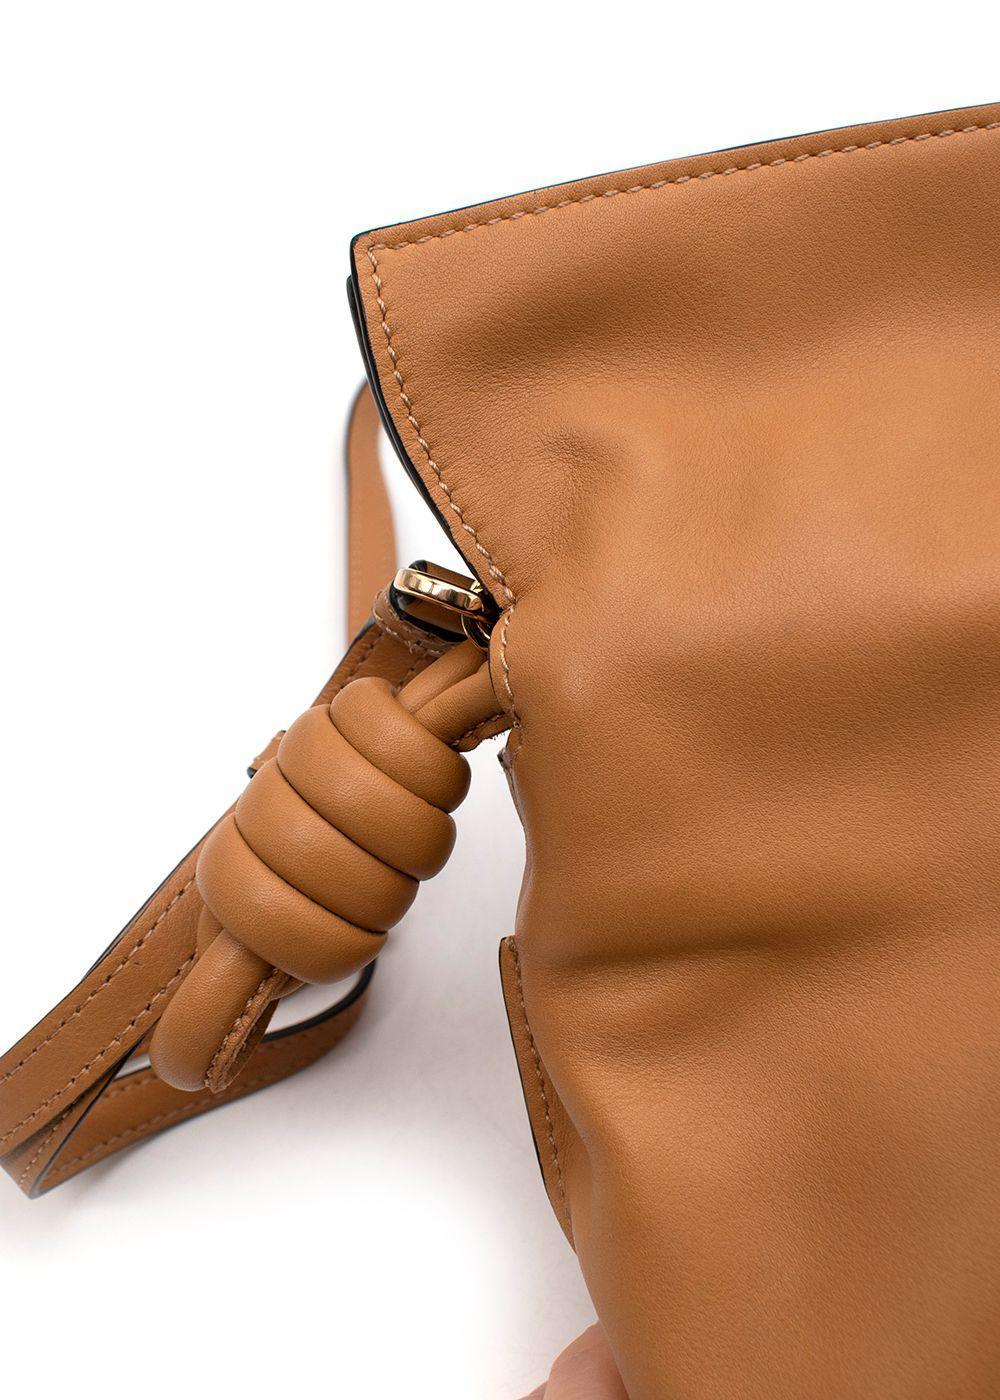 Loewe Tan Brown Leather Mini Flamenco Knot Clutch Bag For Sale 2